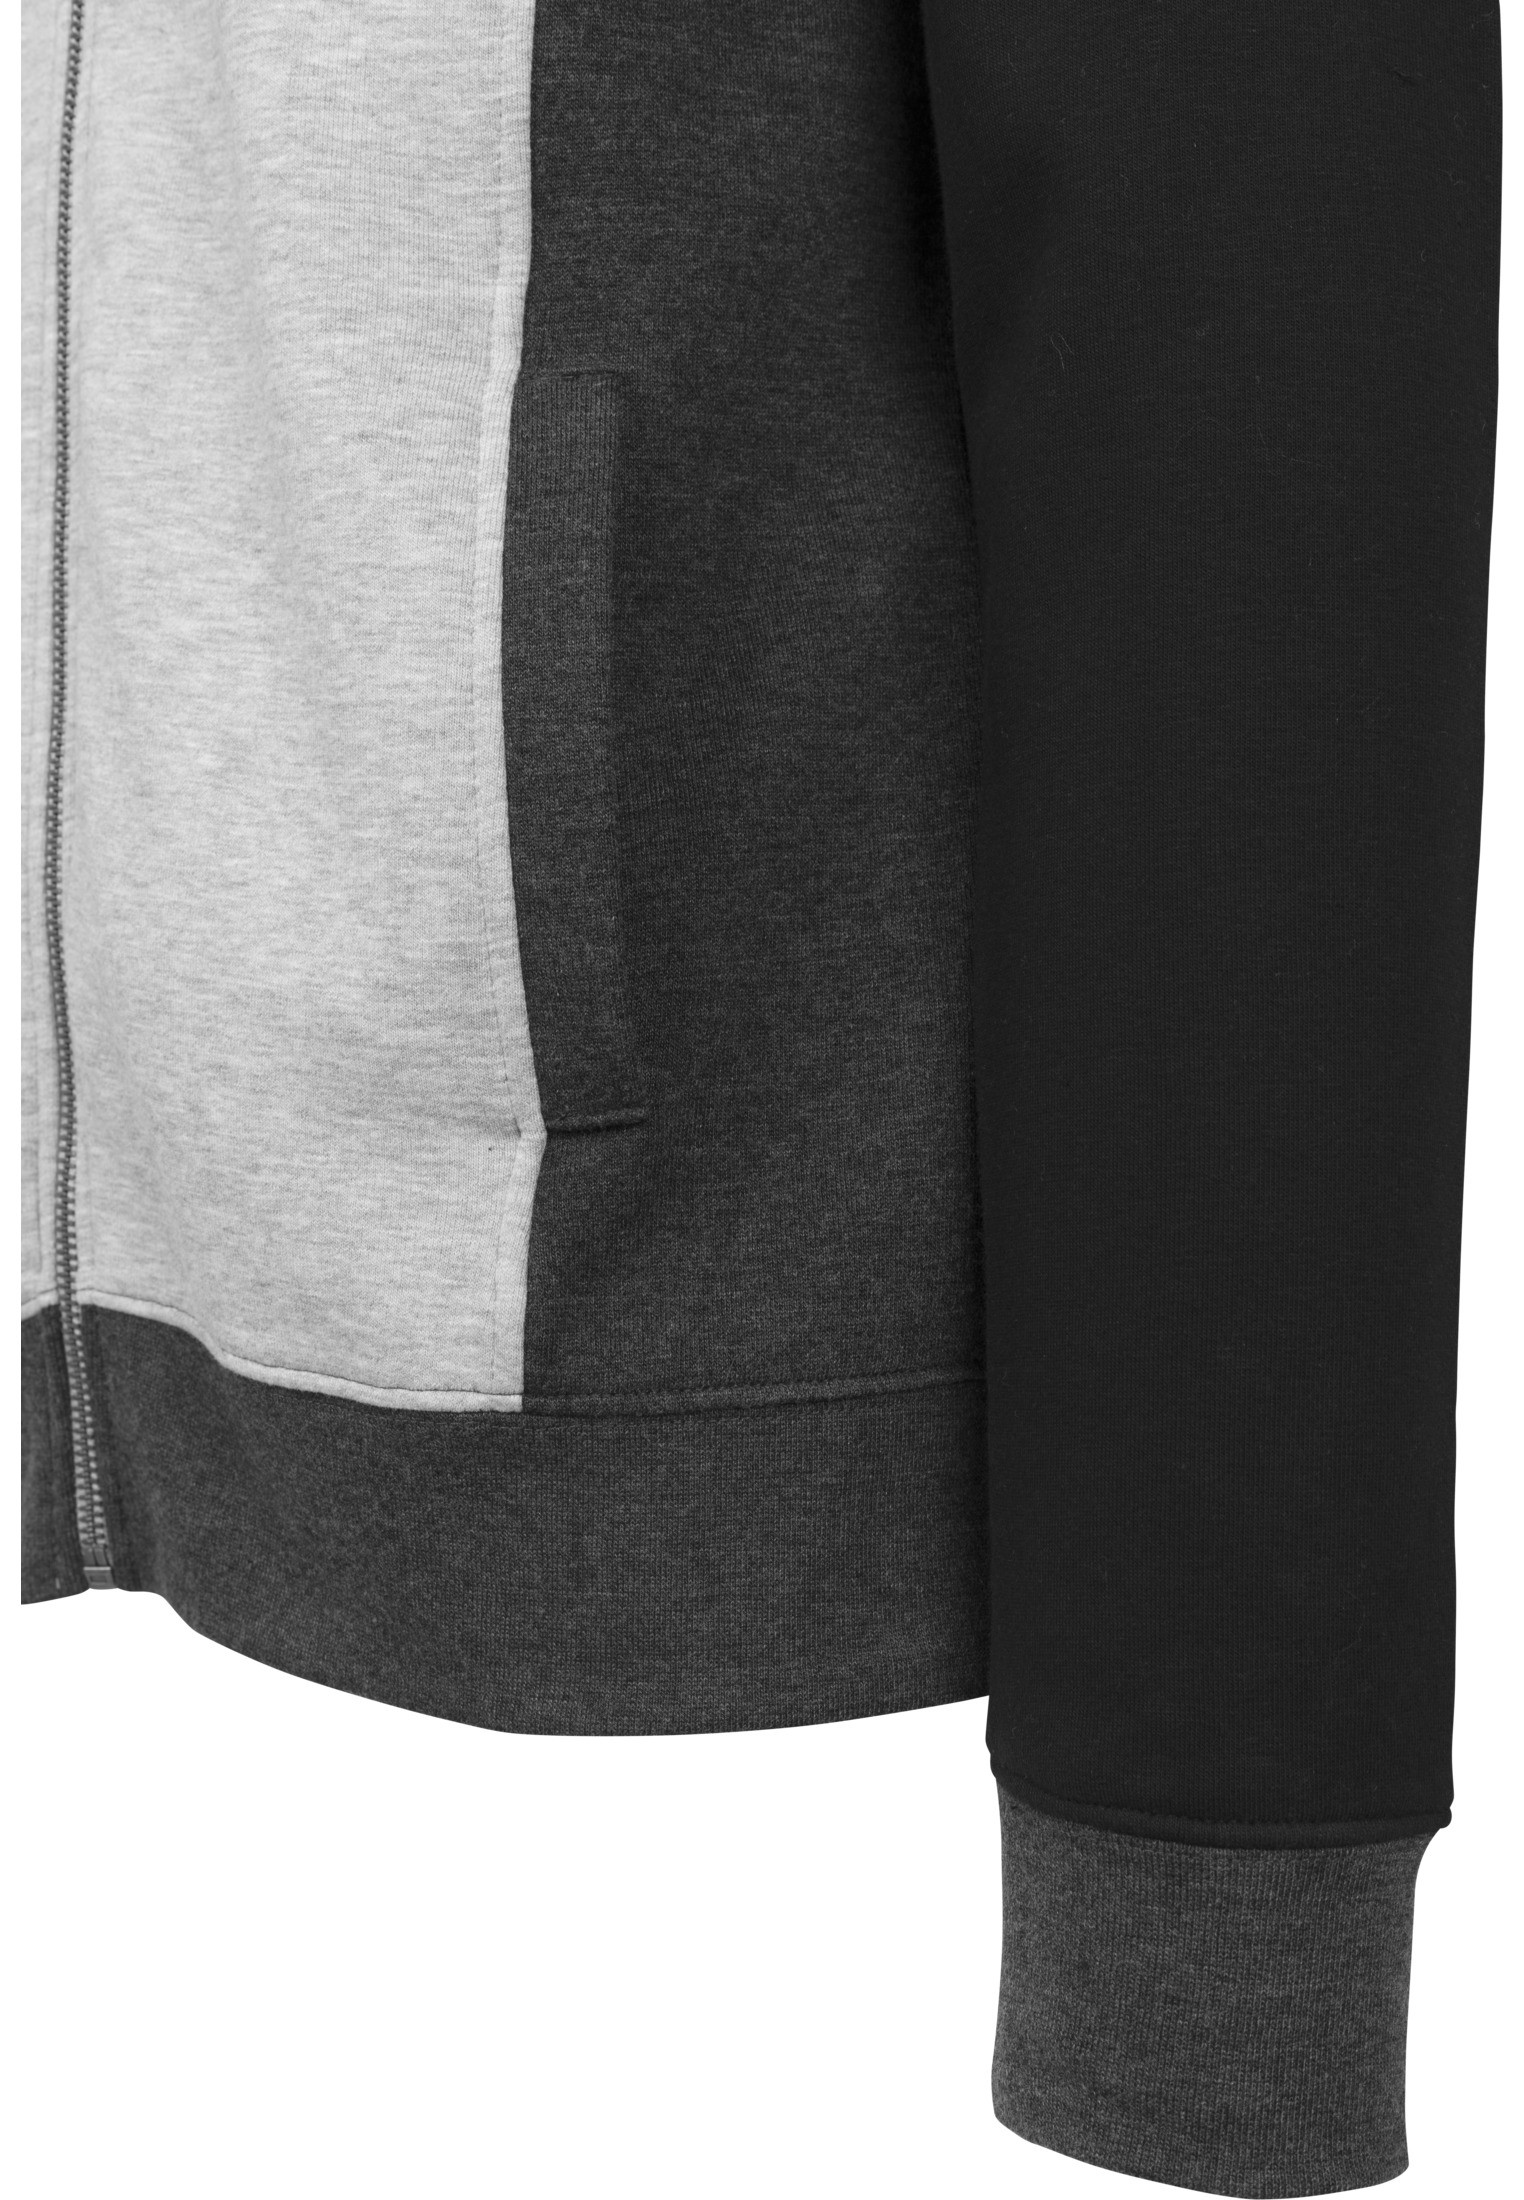 Zip Hoodies 3- Tone Sweat Zip Hoody in Farbe grey/charcoal/black